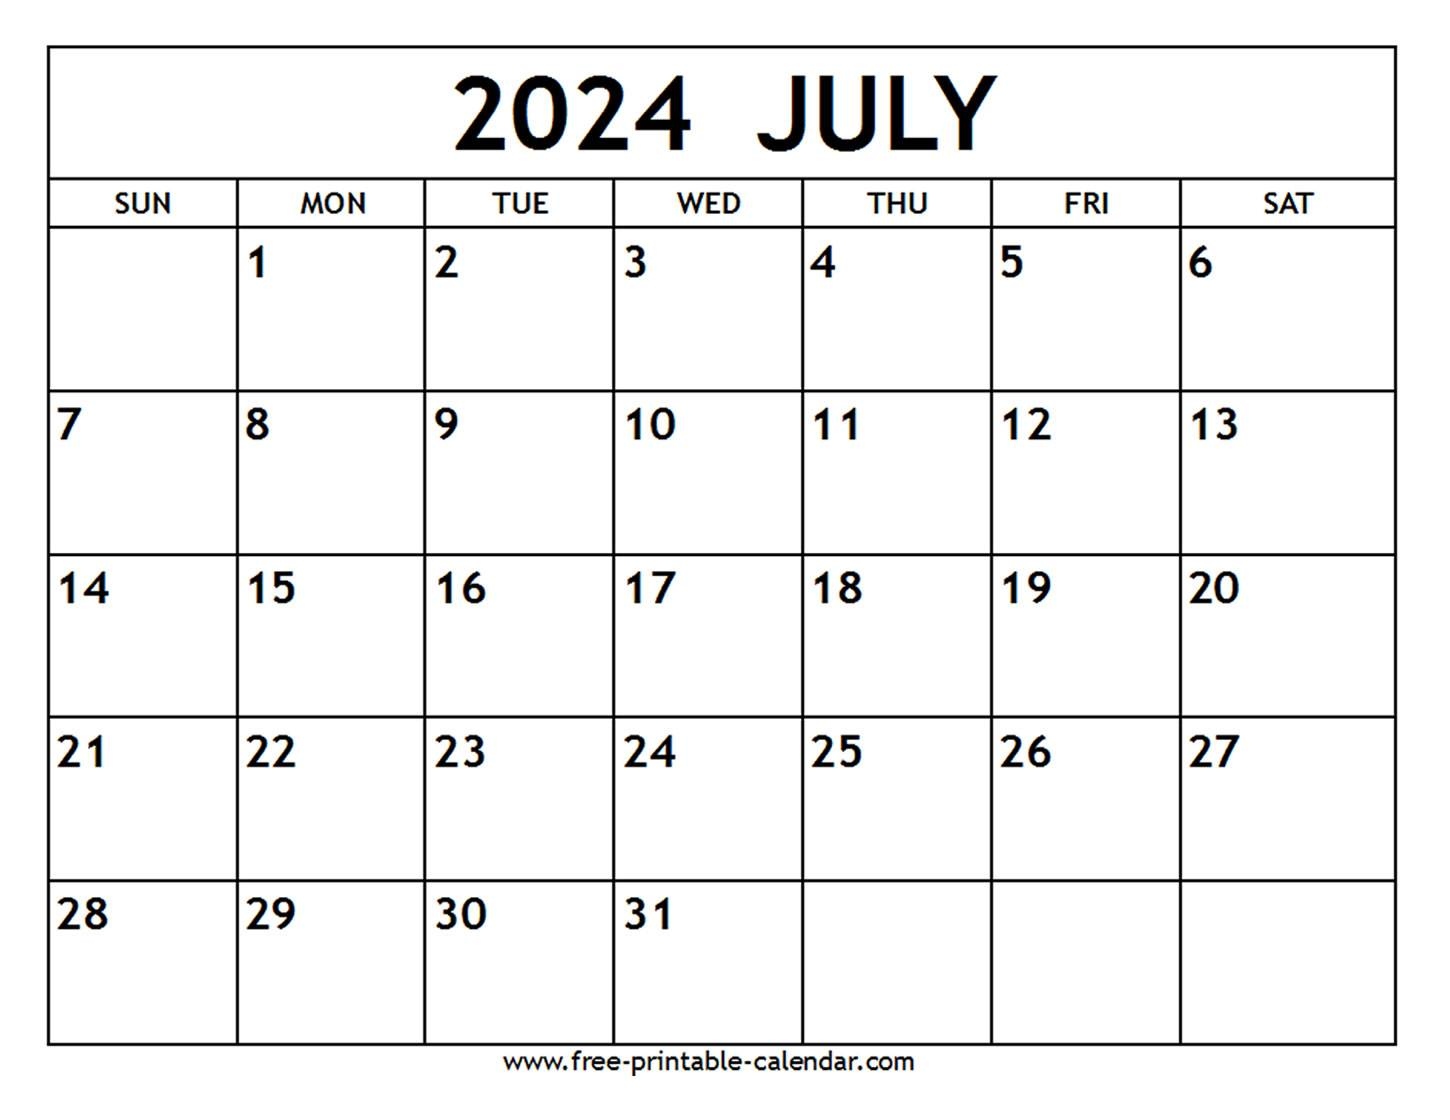 July 2024 Calendar - Free-Printable-Calendar within Free Printable Blank July 2024 Calendar